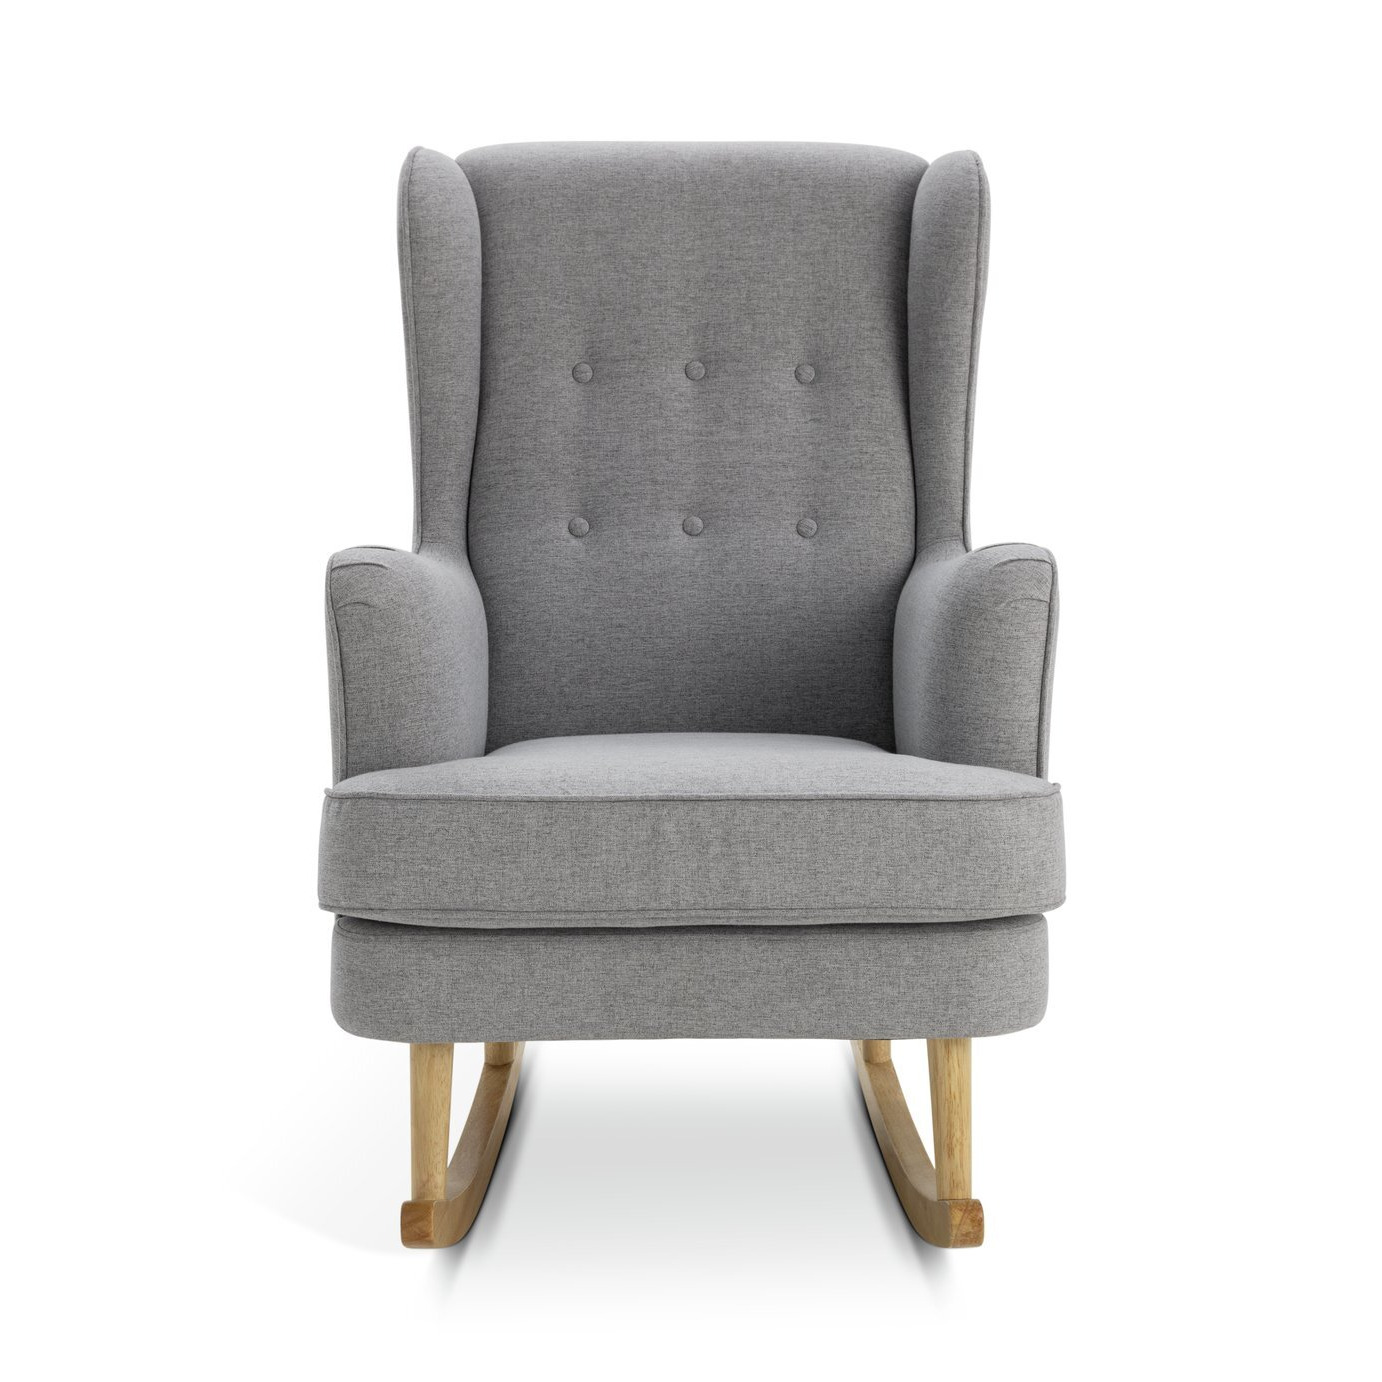 Habitat Callie Fabric Rocking Chair - Light Grey - image 1